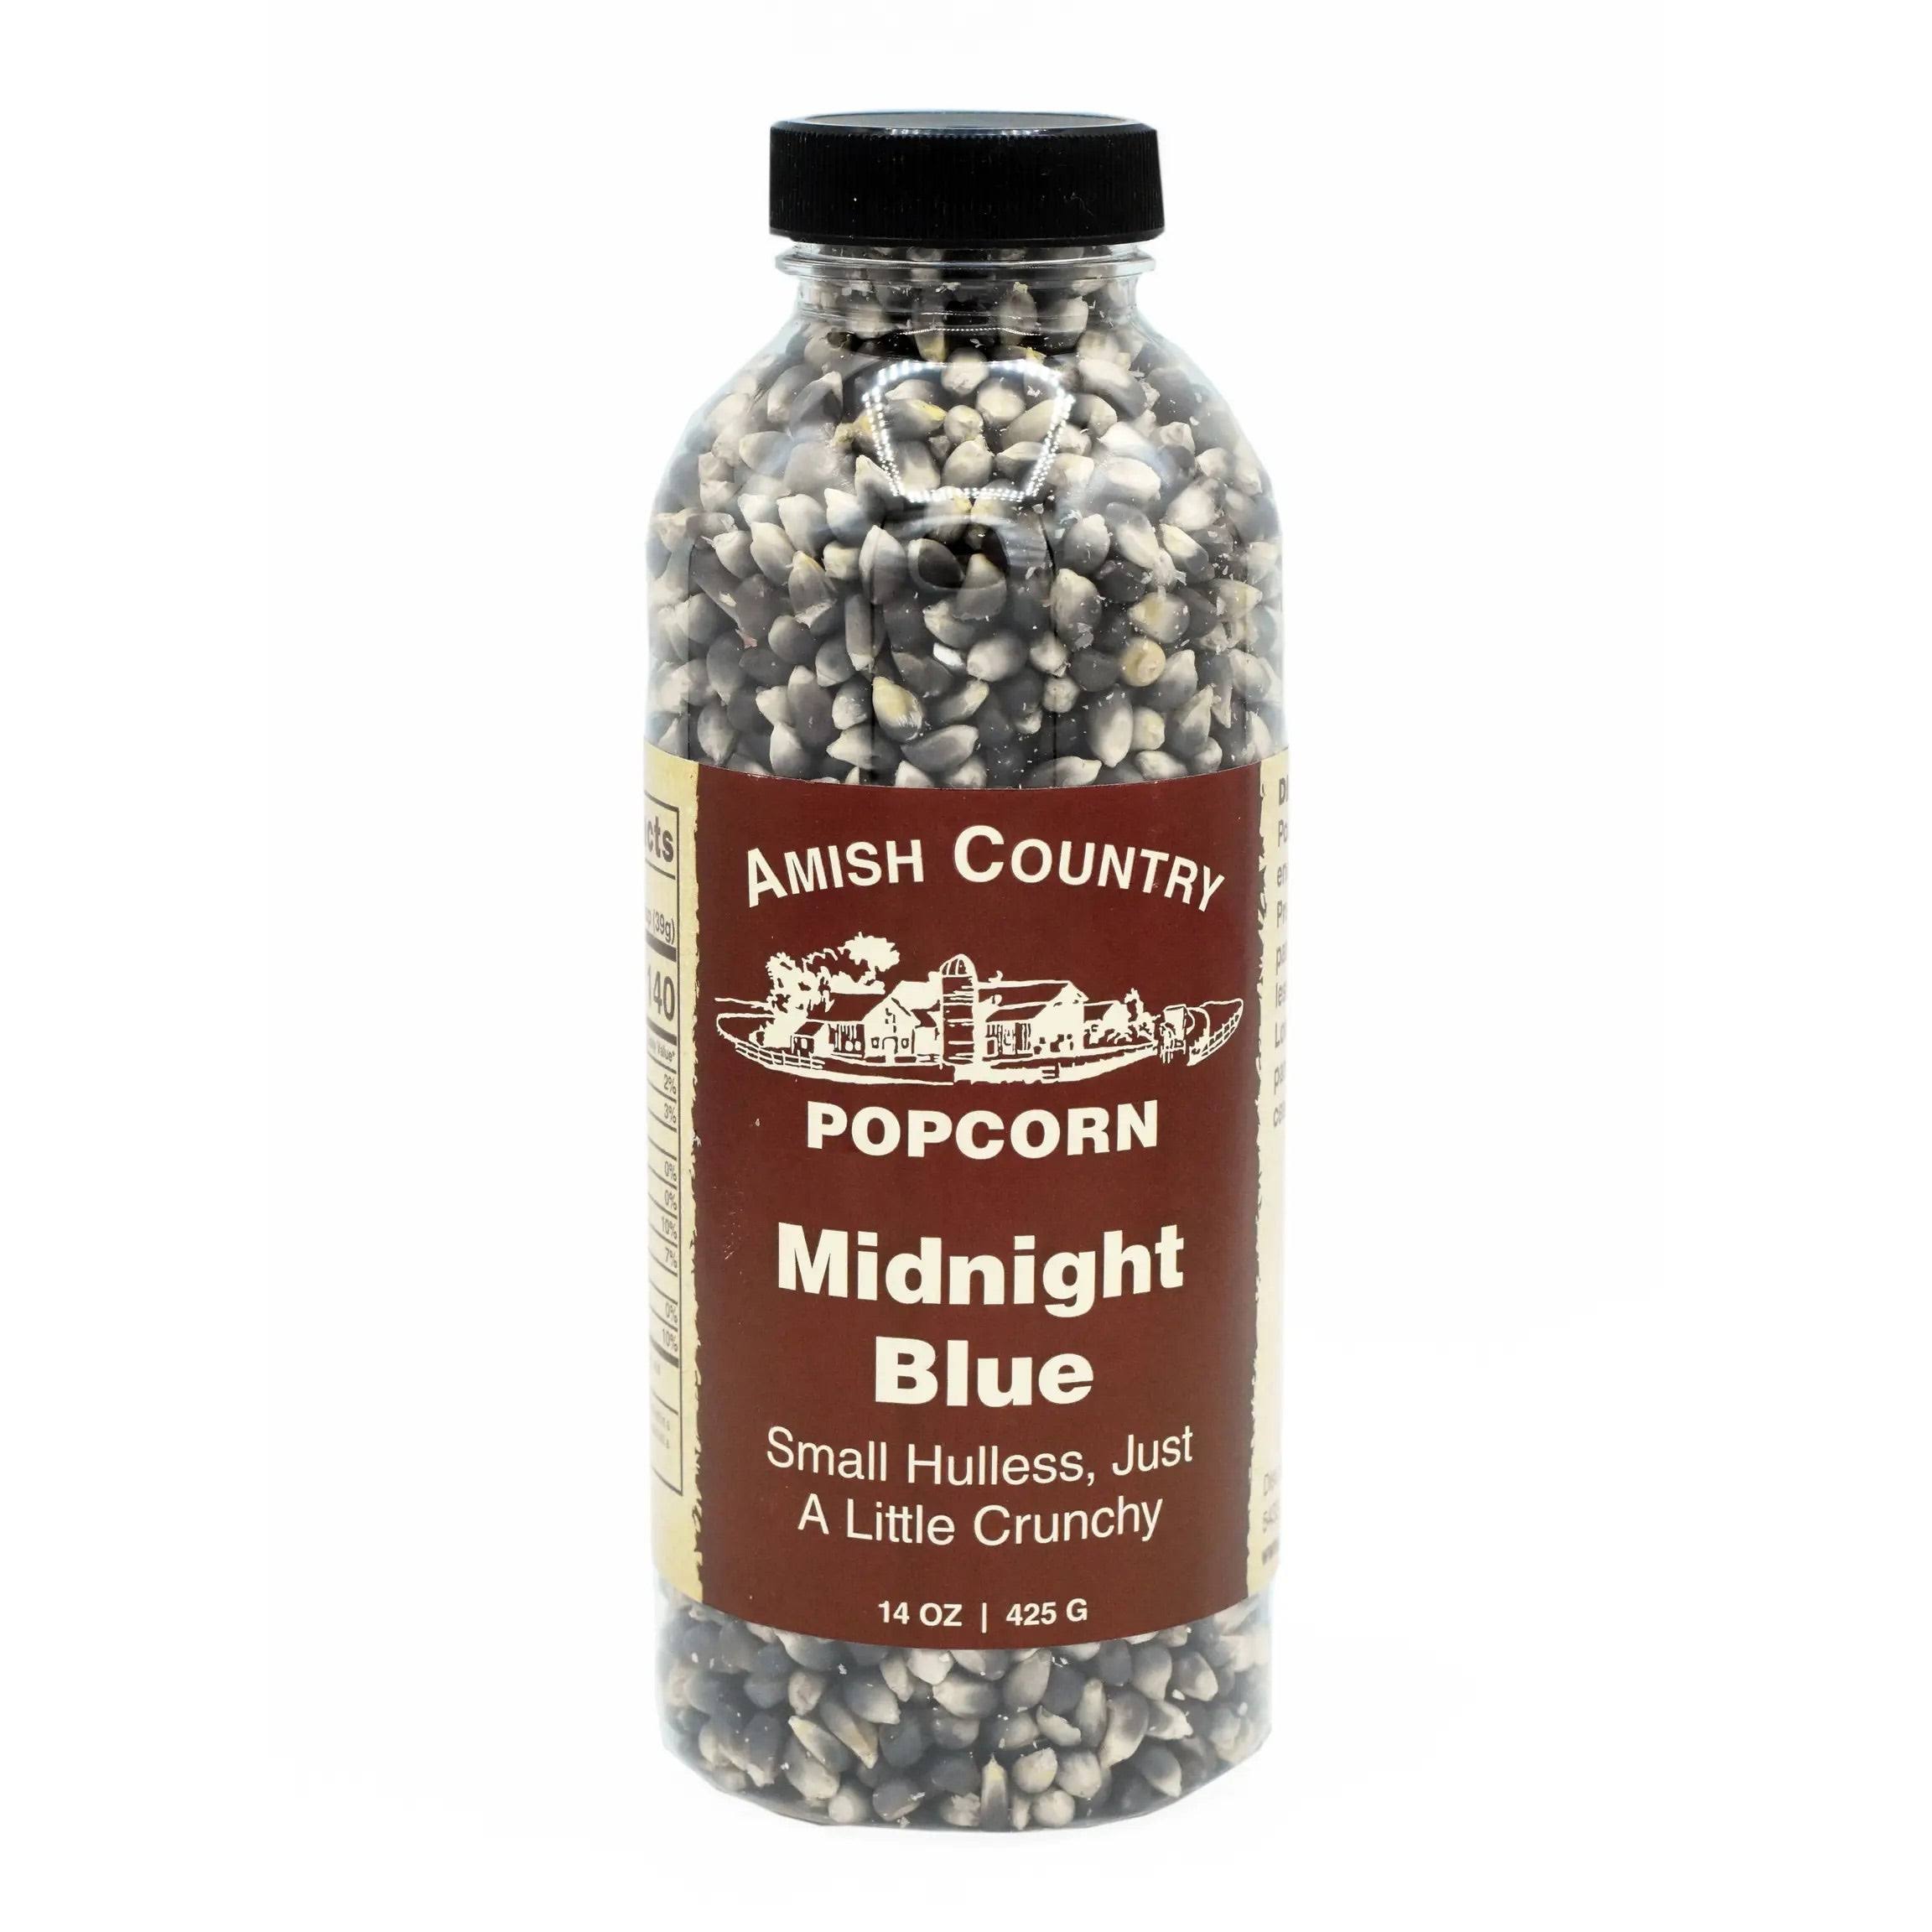 Amish Country Midnight Blue Popcorn Bottle, 14 oz